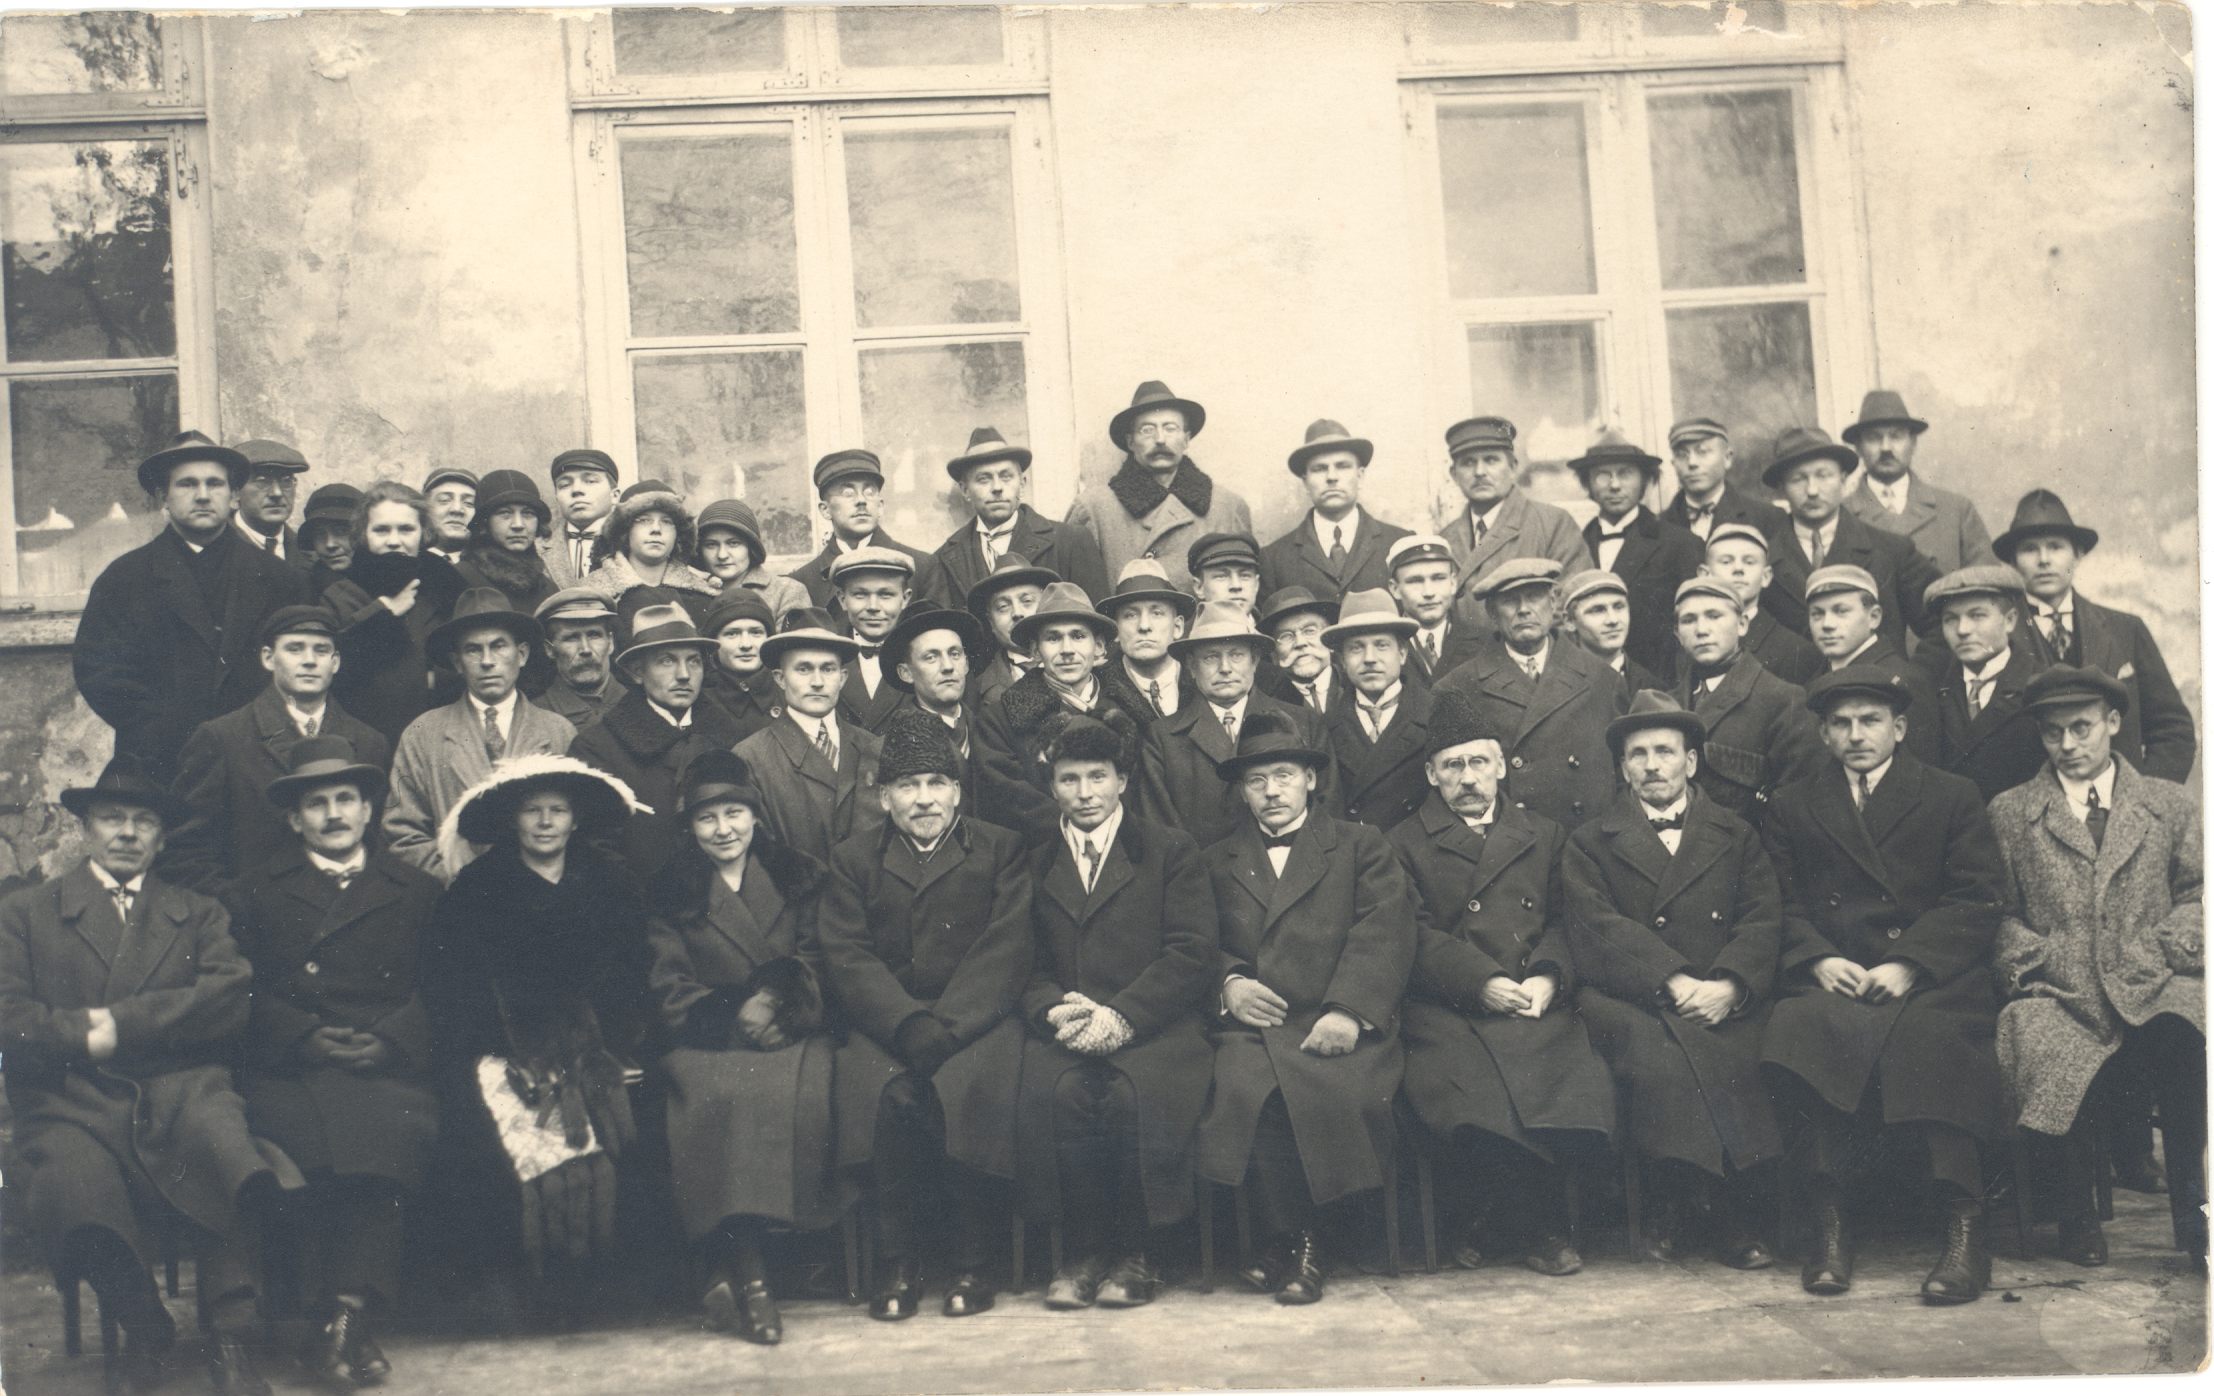 Field Peeter - front row from left 2. - on educational day in Tallinn